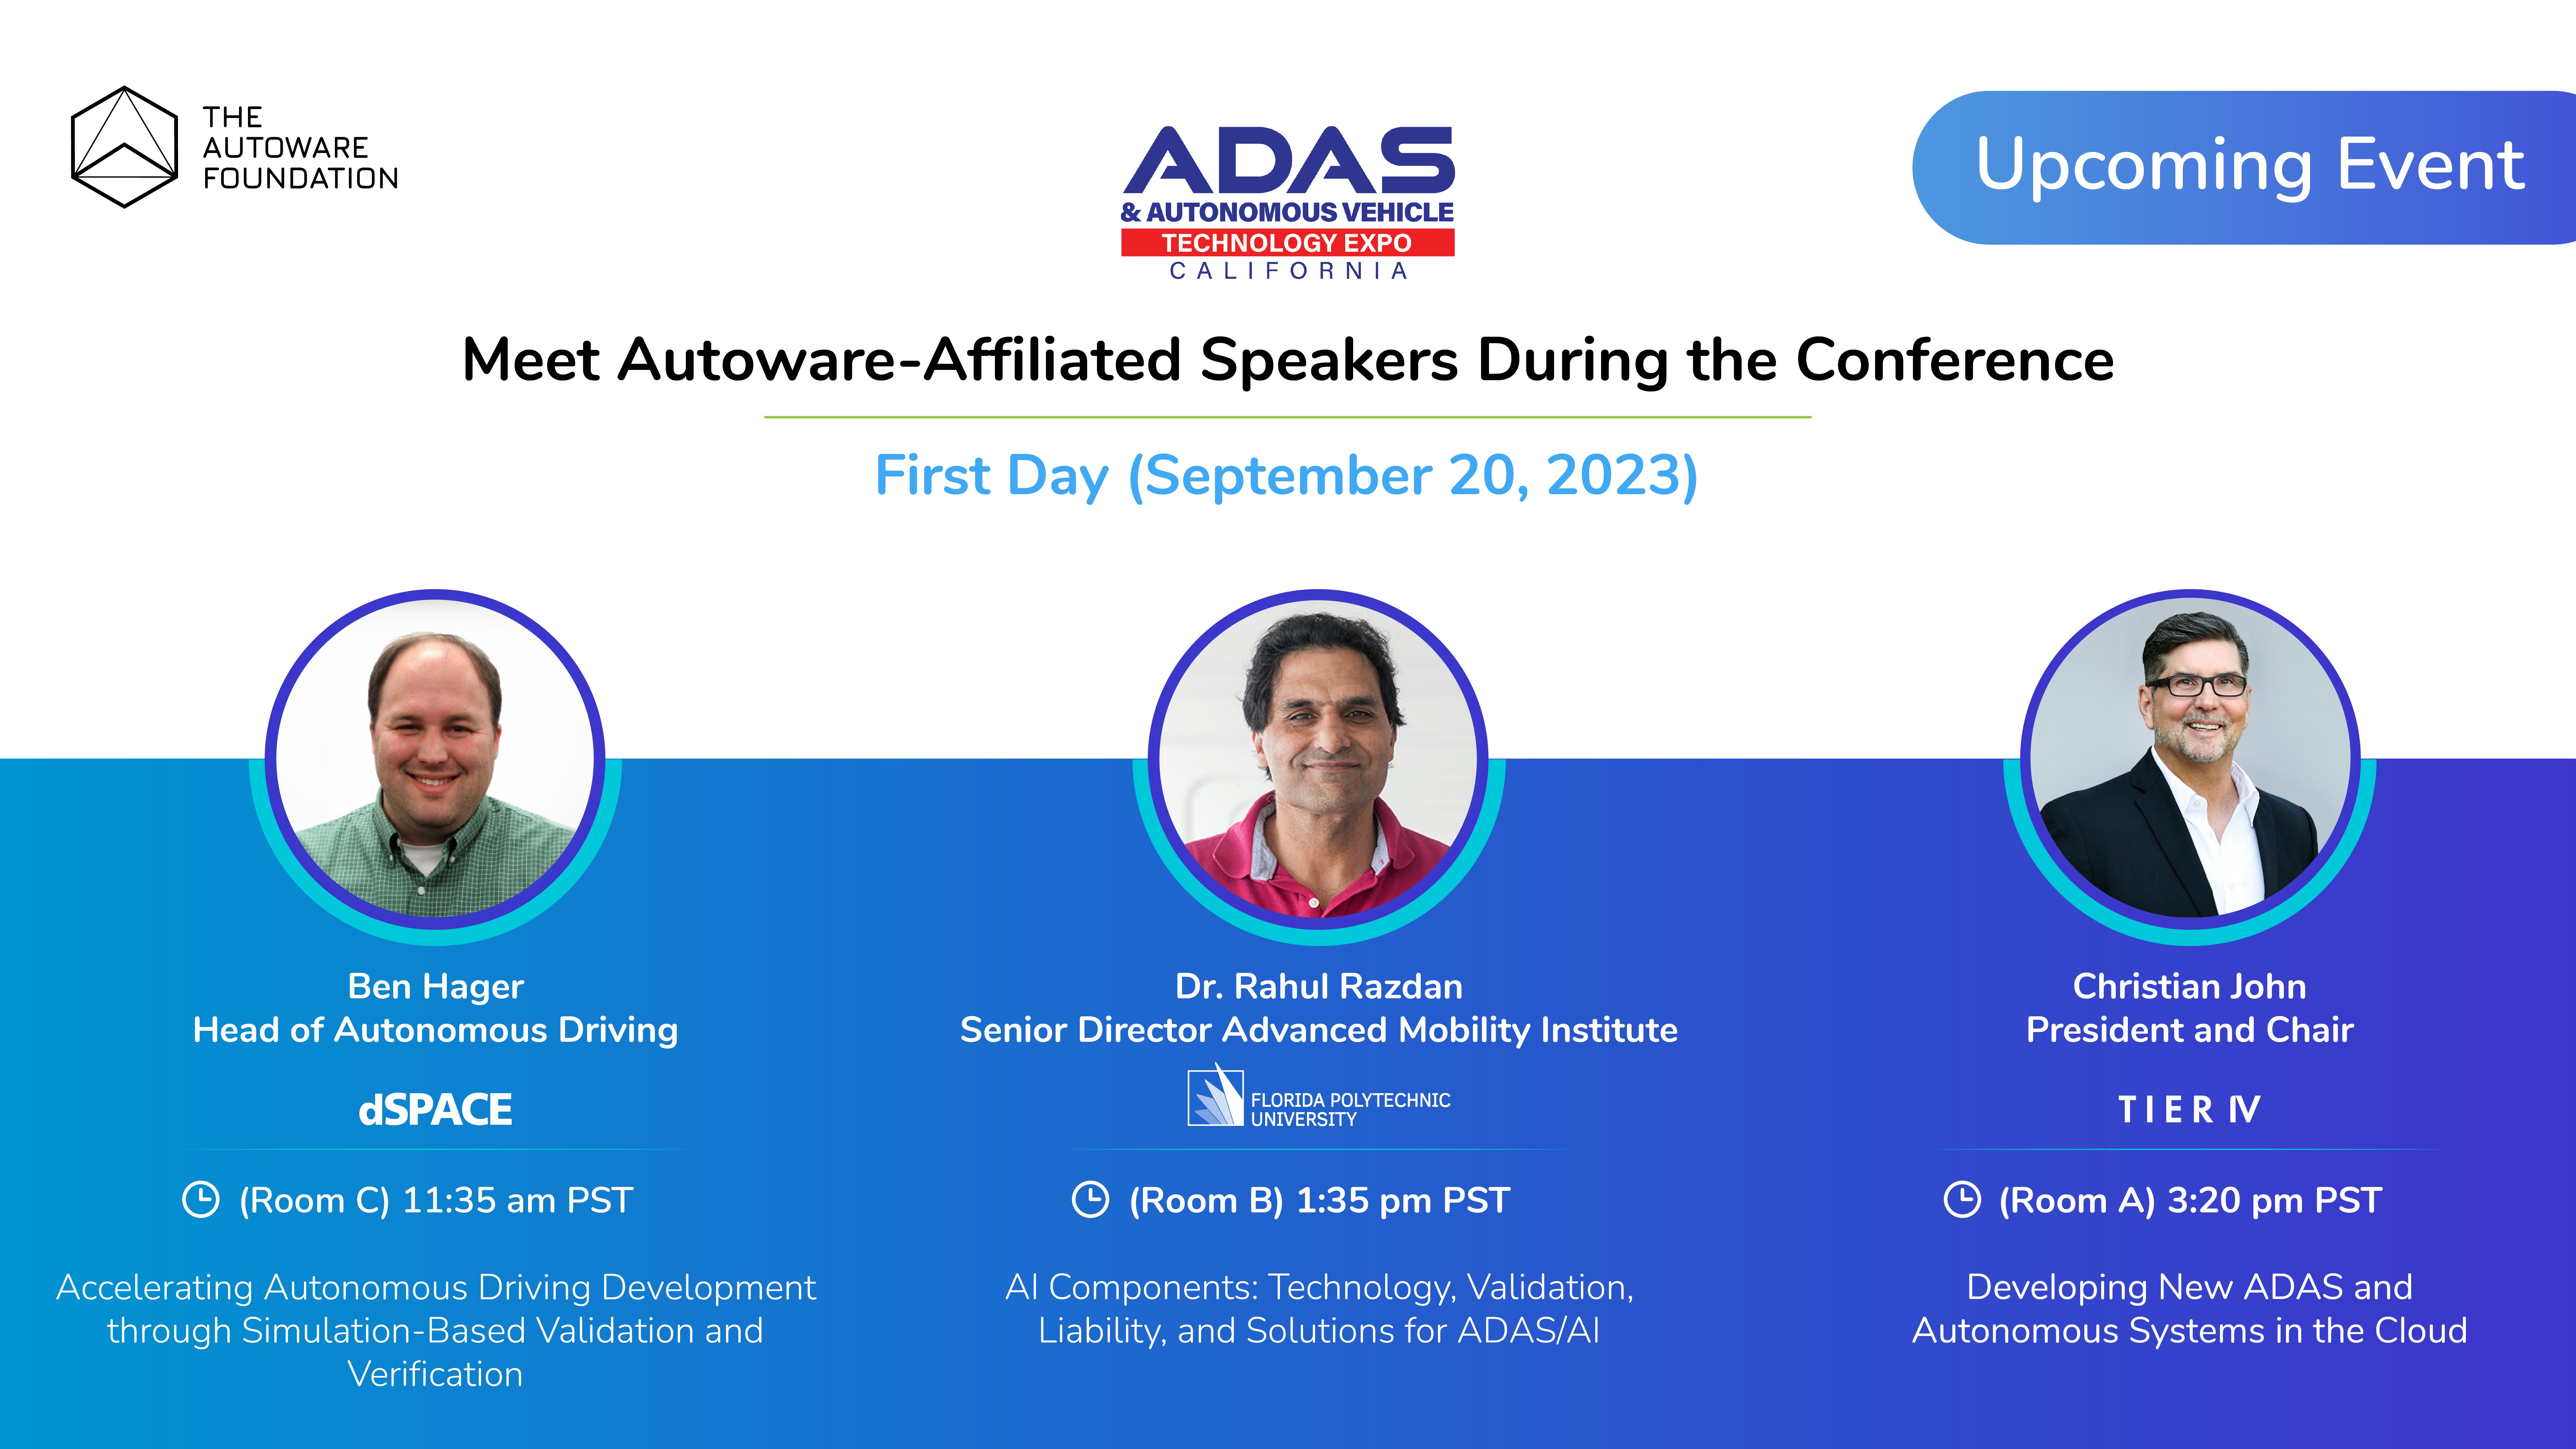 Autoware Foundation is going to Autonomous Vehicle Technology Expo in Santa Clara